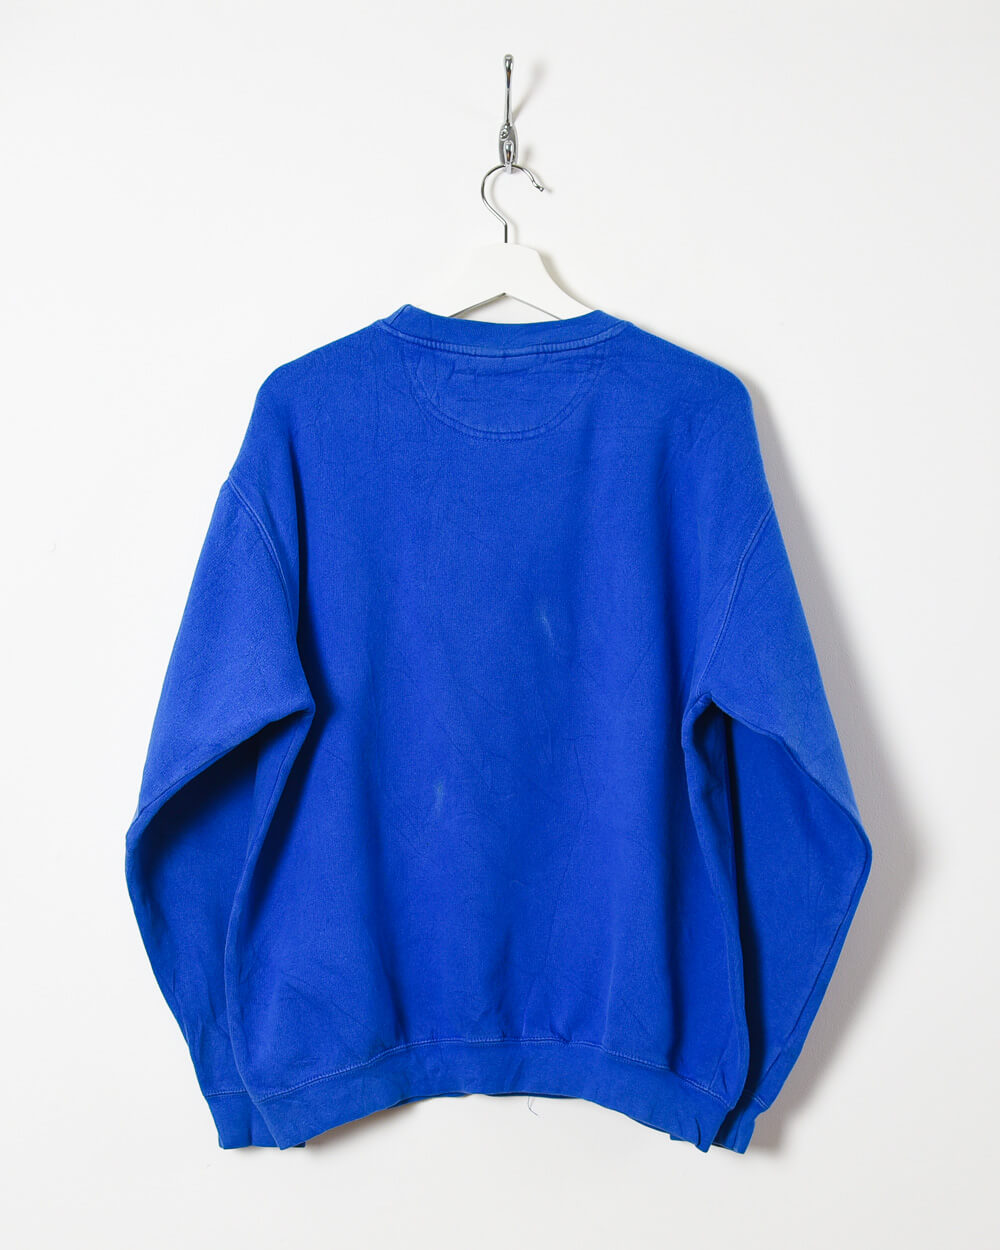 Boise State Sweatshirt - Medium - Domno Vintage 90s, 80s, 00s Retro and Vintage Clothing 